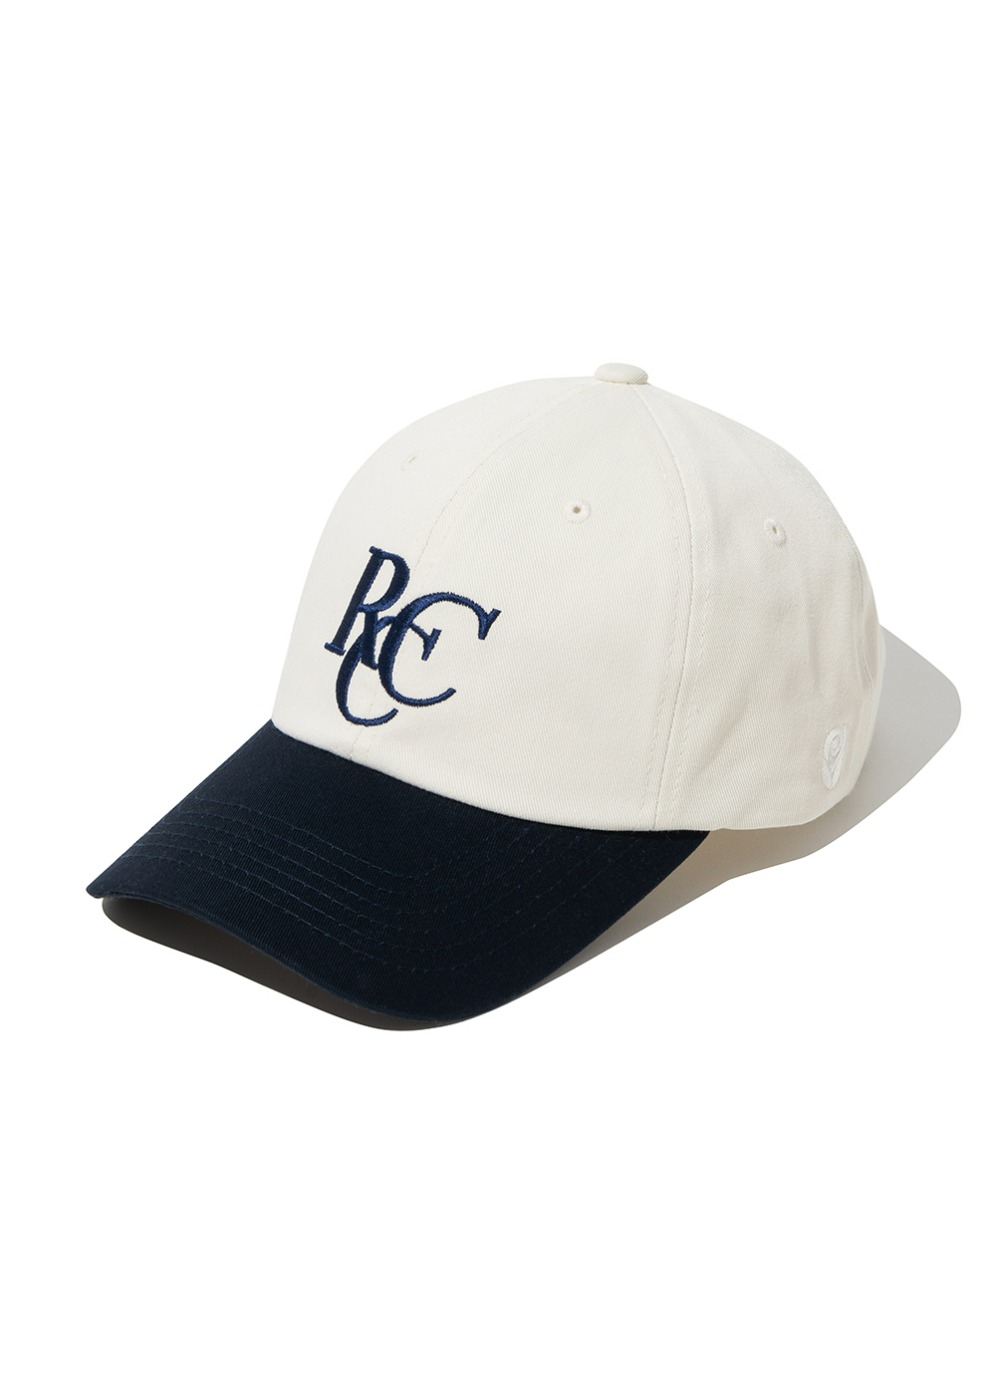 RCC Logo ball cap [CREAM NAVY]RCC Logo ball cap [CREAM NAVY]자체브랜드